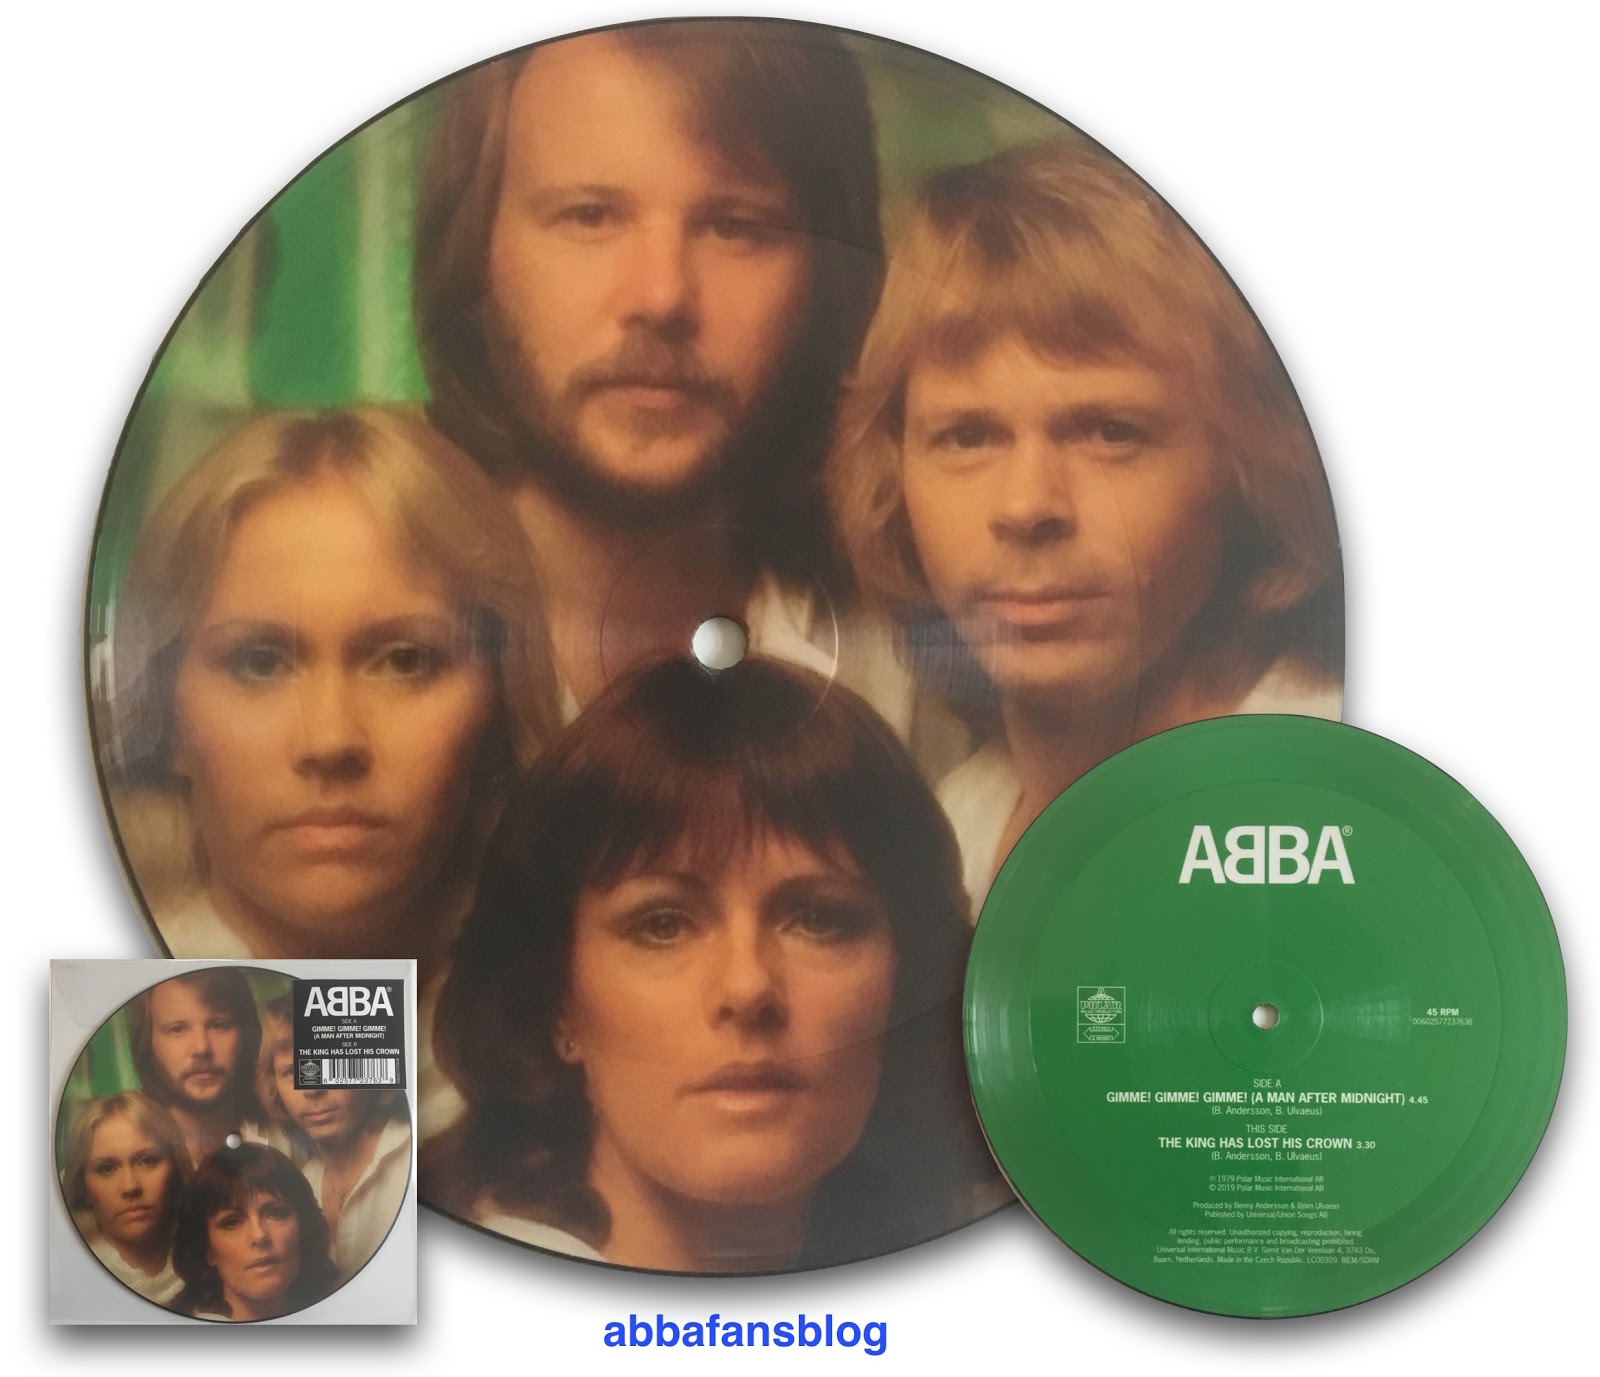 ABBA Gimme Gimme пластинка. ABBA - Gimme! Gimme! Gimme! (A man after Midnight). Абба пластинки фото. ABBA - Gimme! Gimme! Gimme каверы.